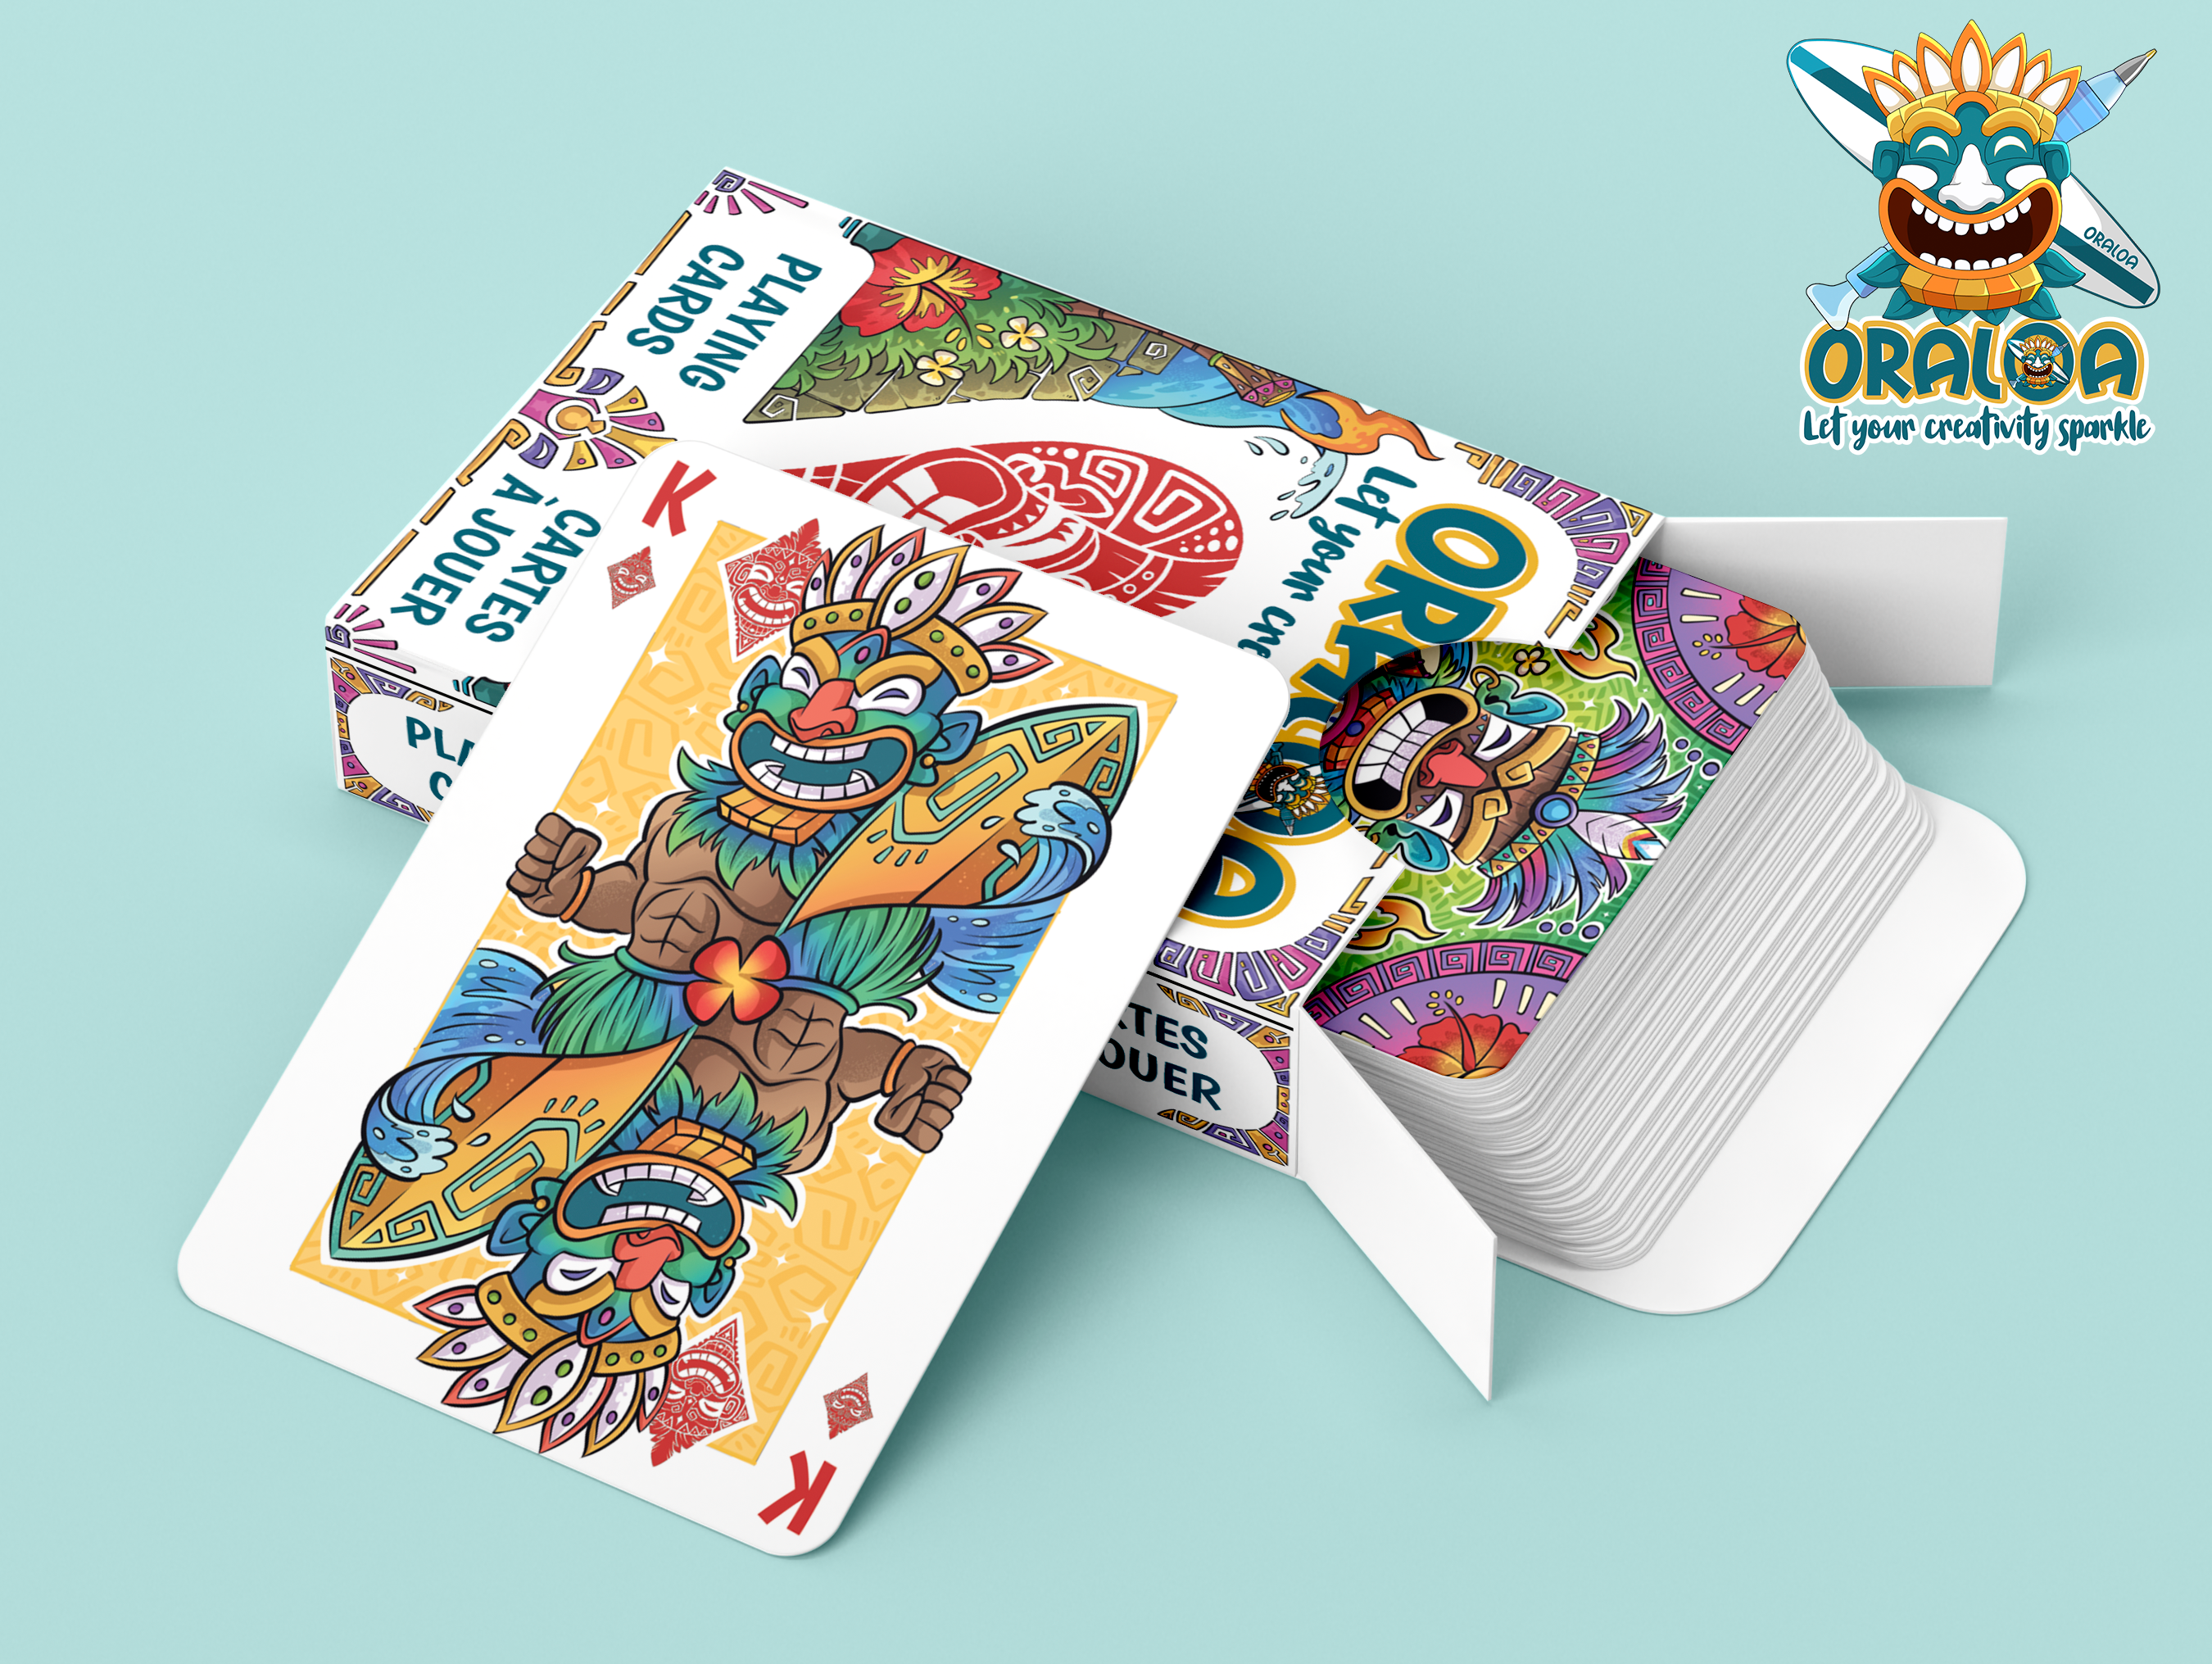 Kartenspiel Oraloa